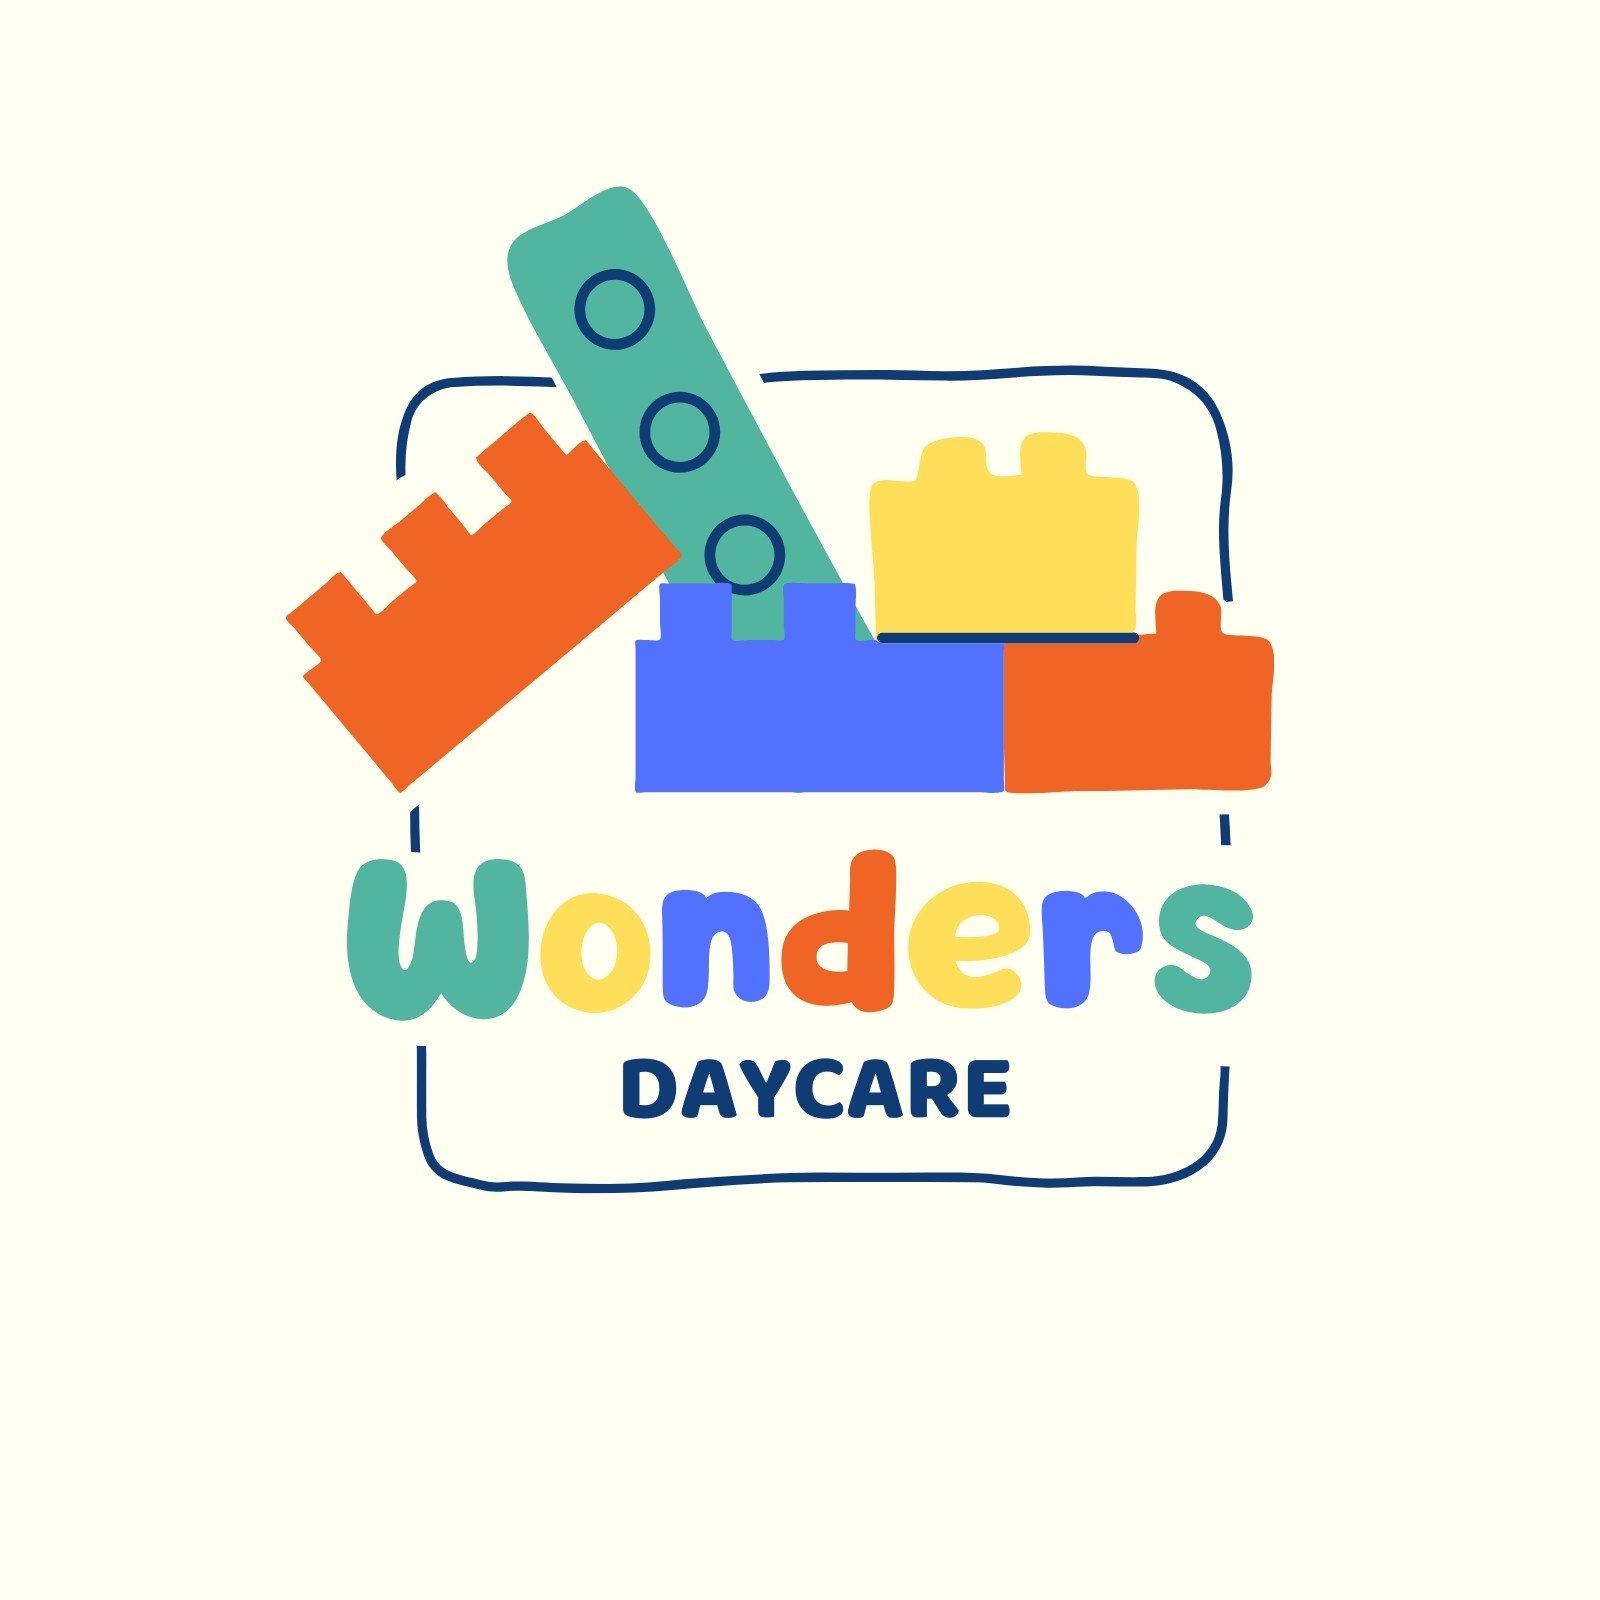 daycare logos samples